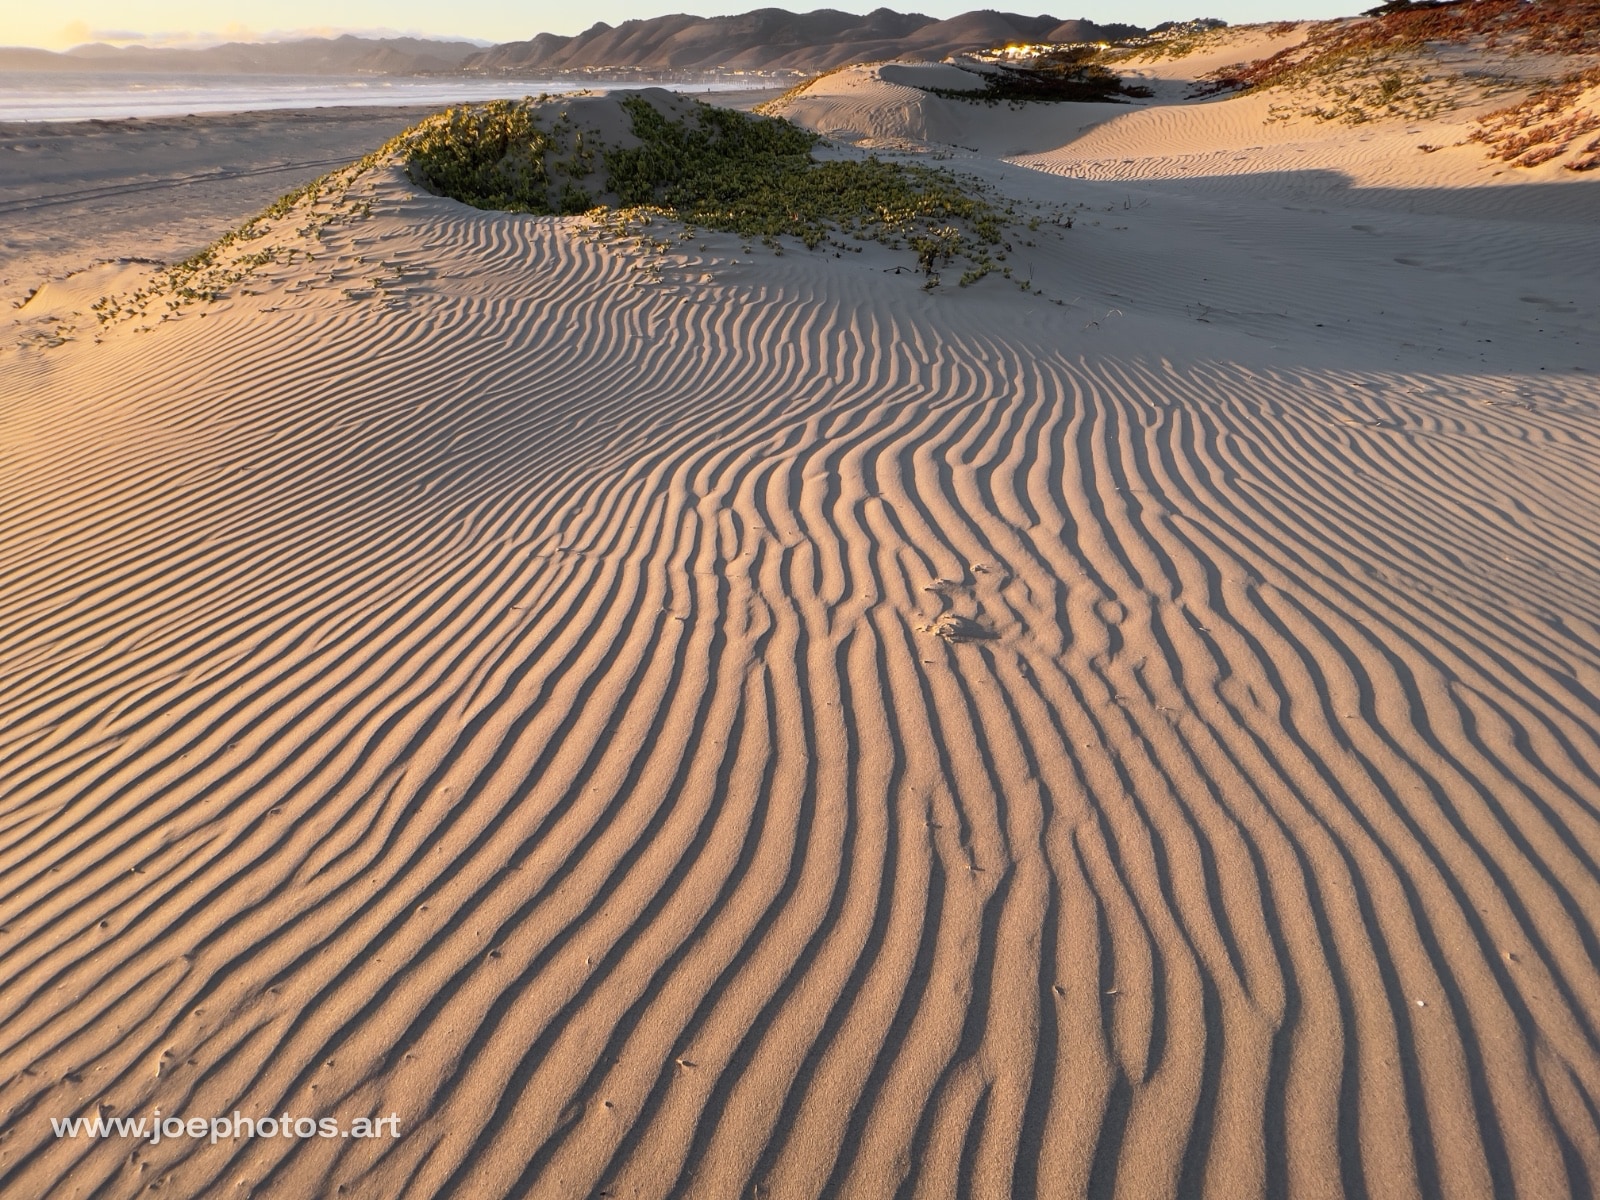 Sand dune ripples.